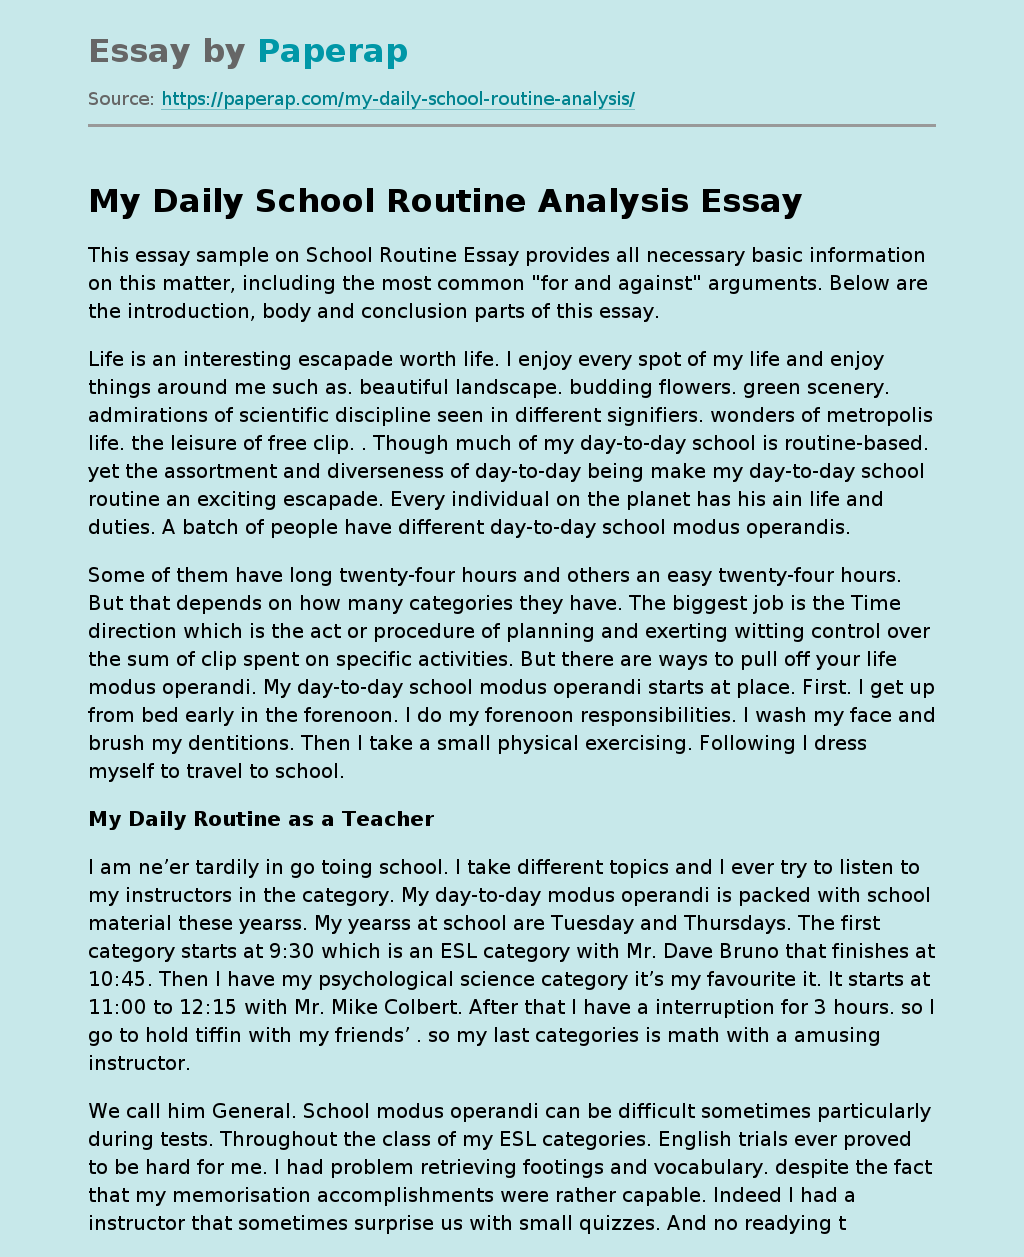 My Daily School Routine Analysis